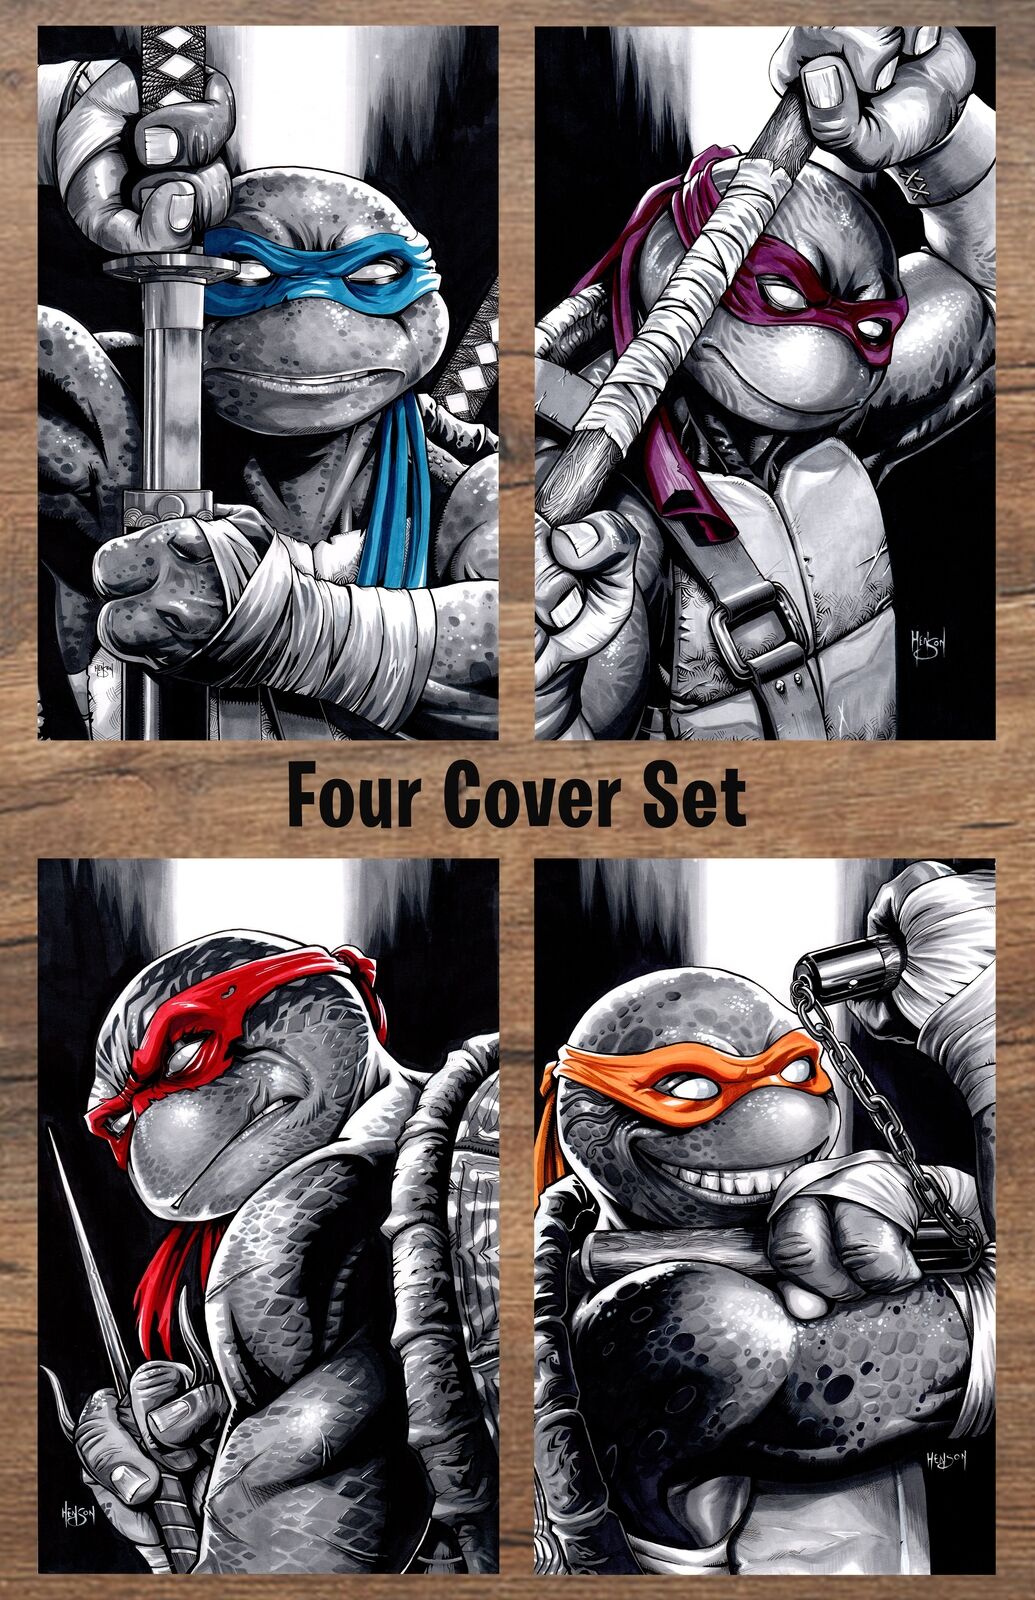 Teenage Mutant Ninja Turtles #132 Surprise Comics Exclusive by Eric Henson TMNT